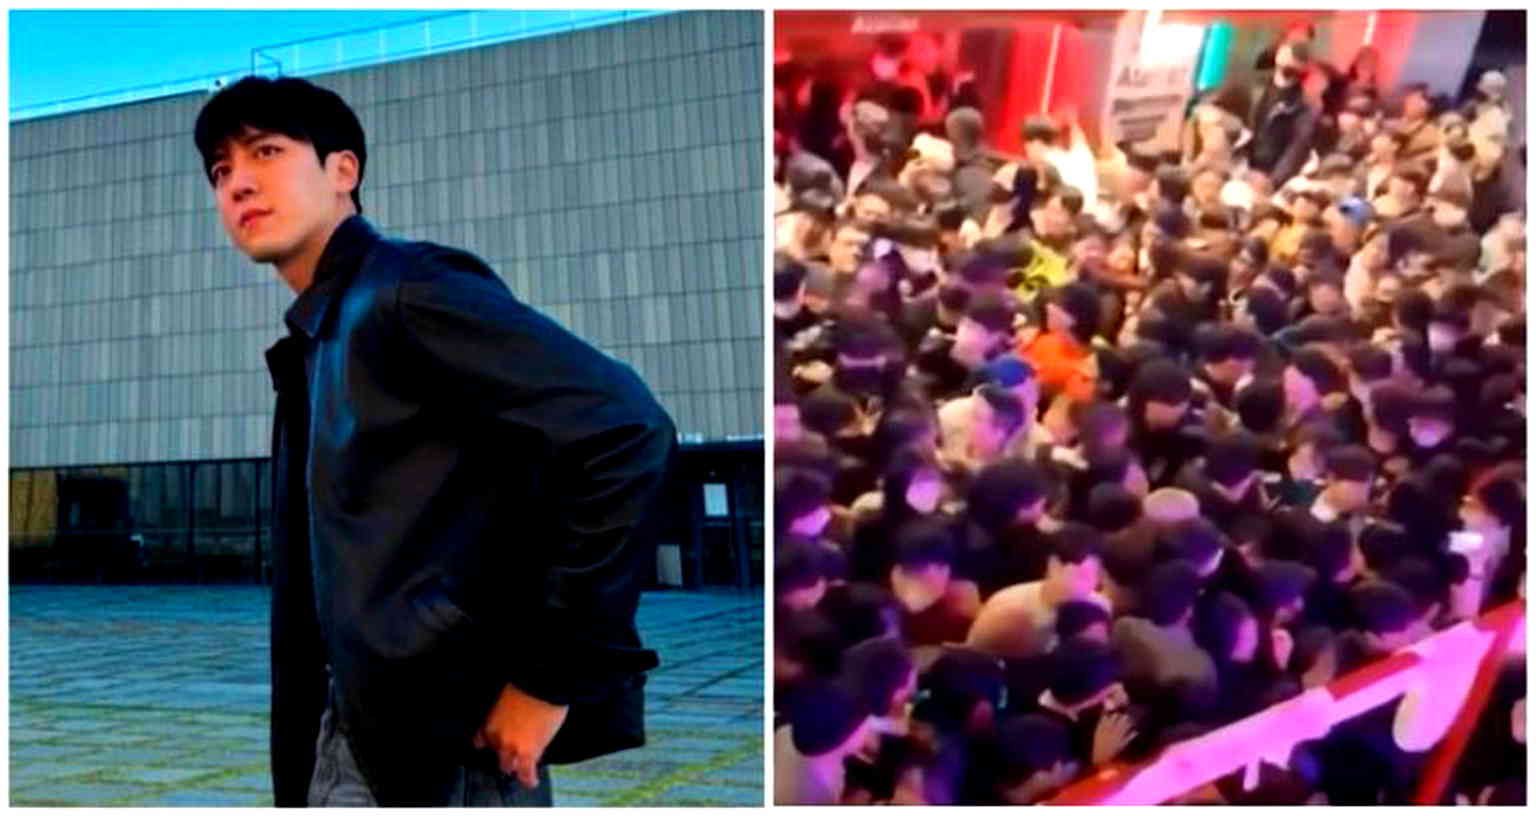 Actor Yoon Hong-bin recalls administering CPR to Seoul crowd crush victim